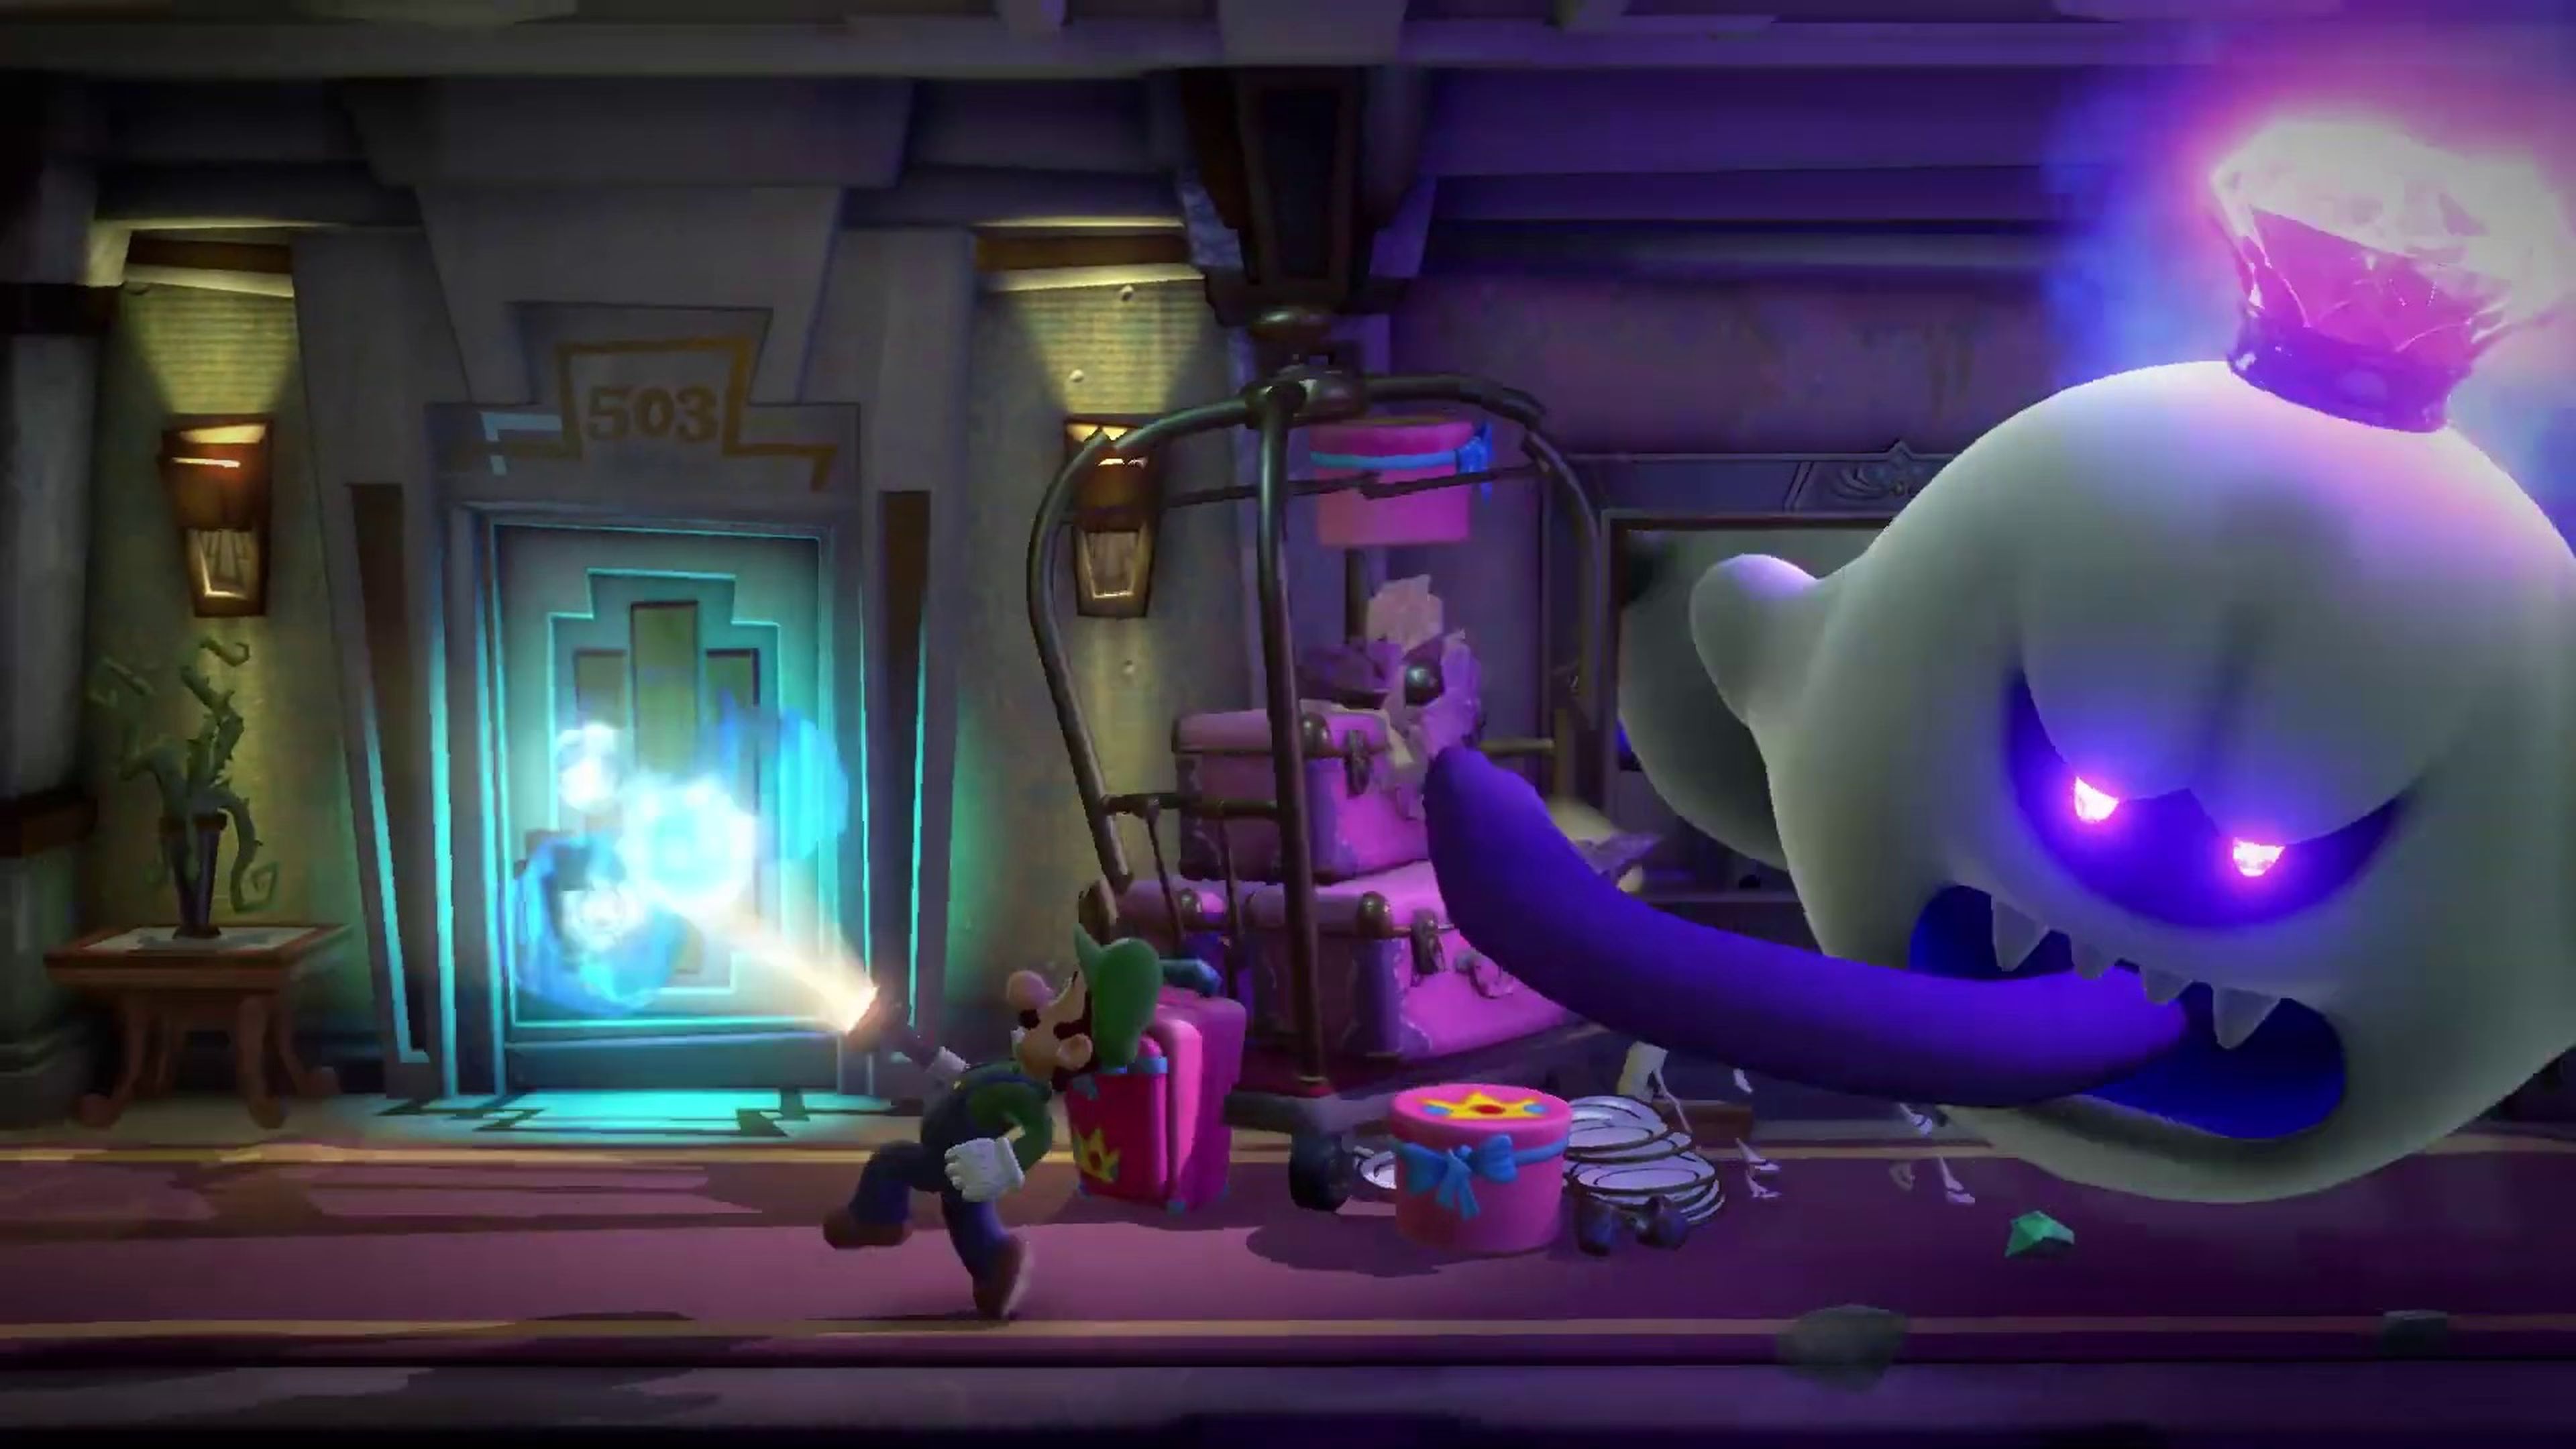 Luigi's Mansion 3 E3 2019